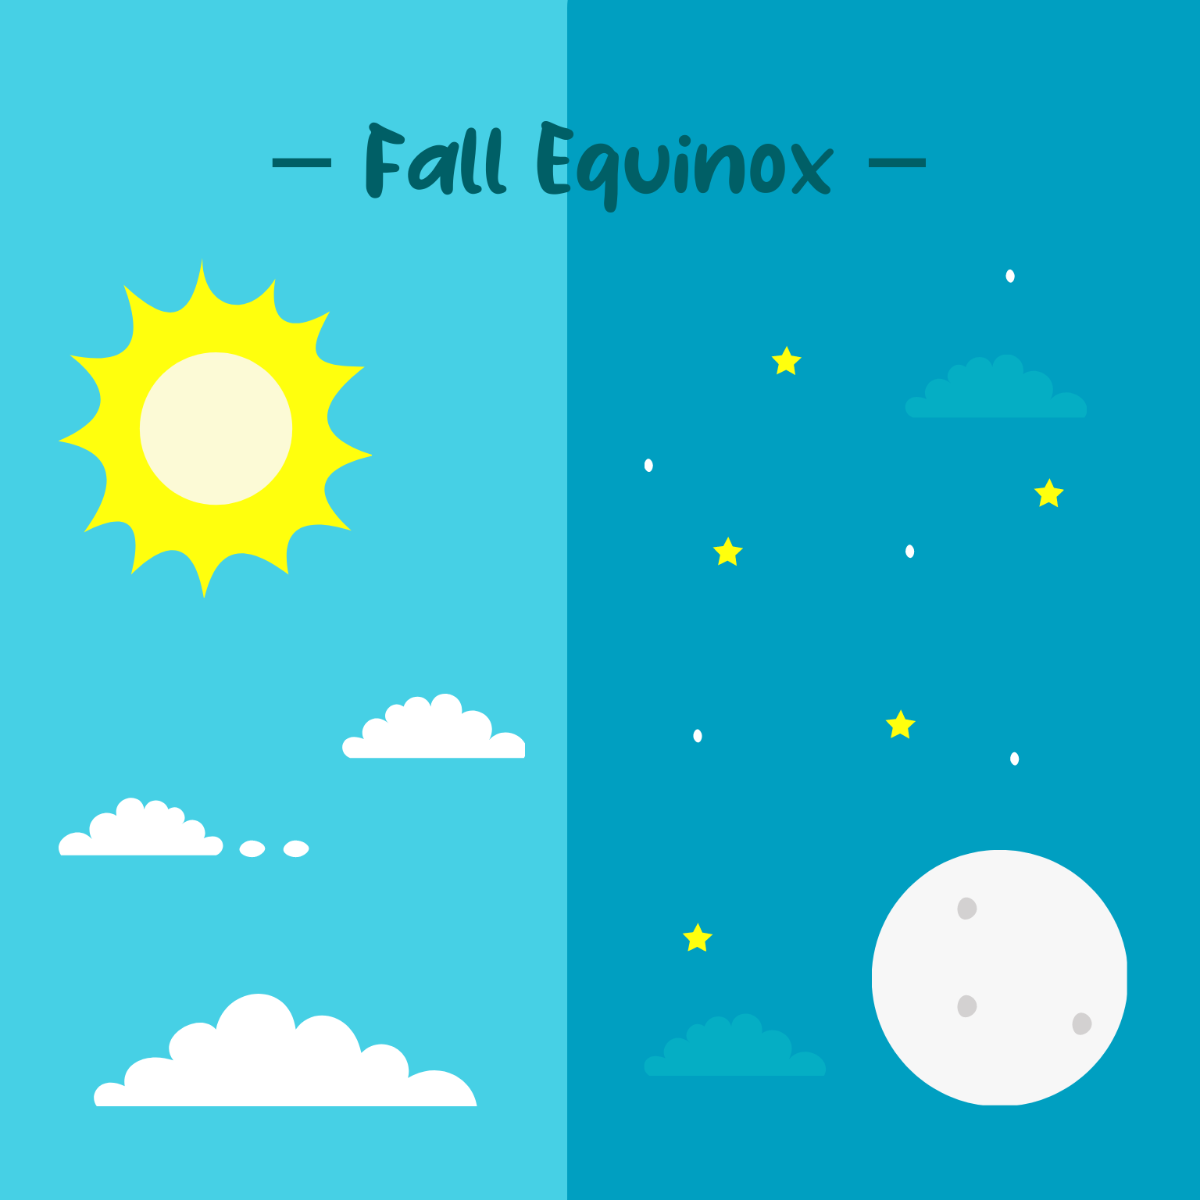 Free Fall Equinox Vector Art Template